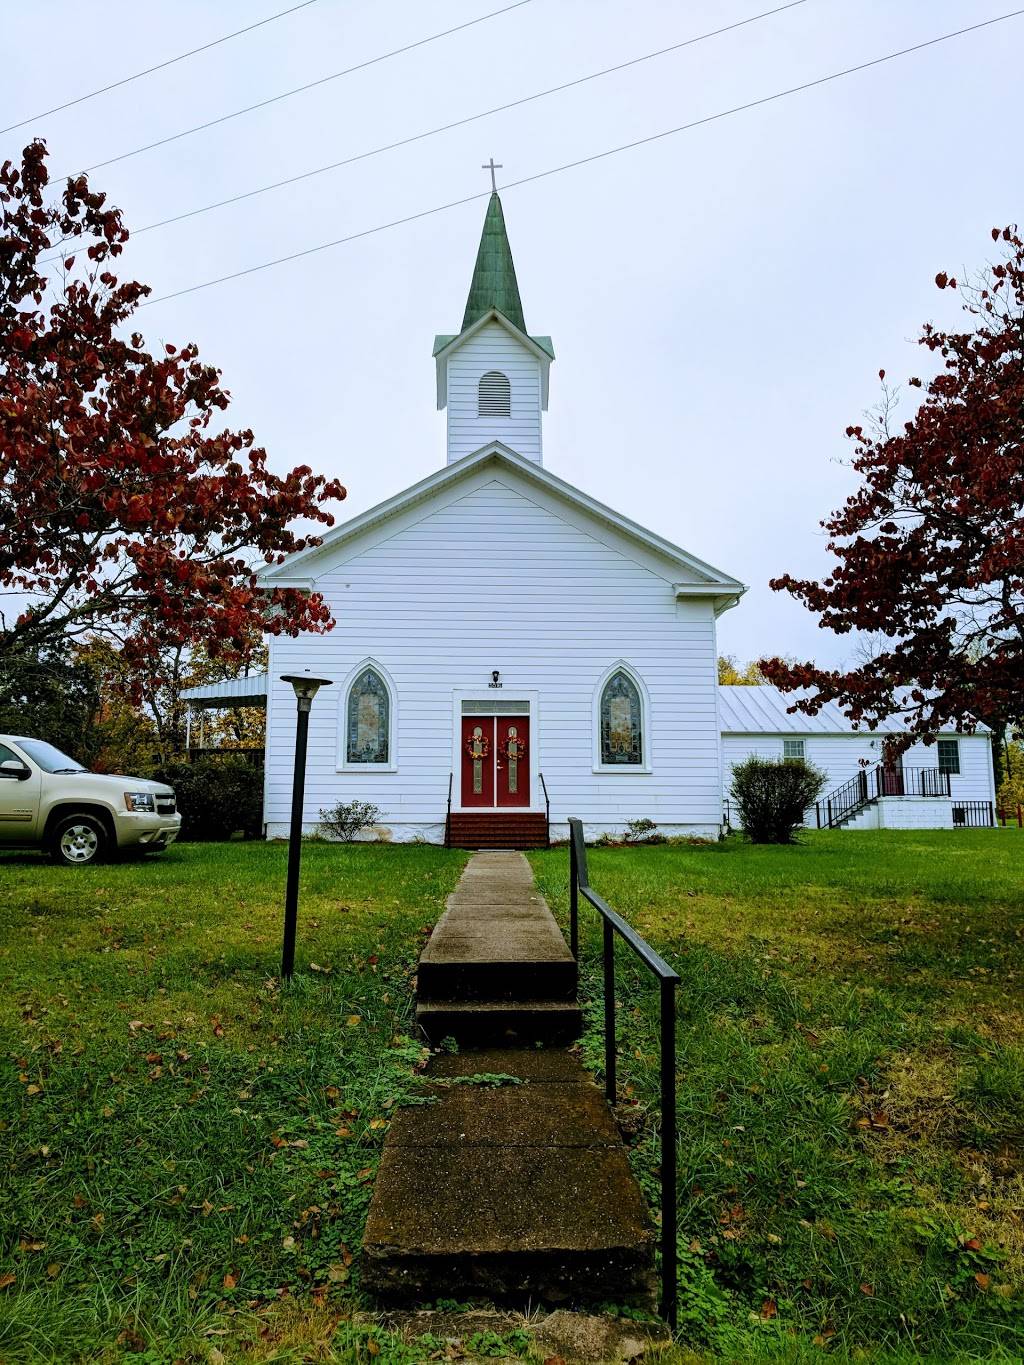 Barboursville Baptist Church | 5516 Governor Barbour St, Barboursville, VA 22923, USA | Phone: (540) 832-2815